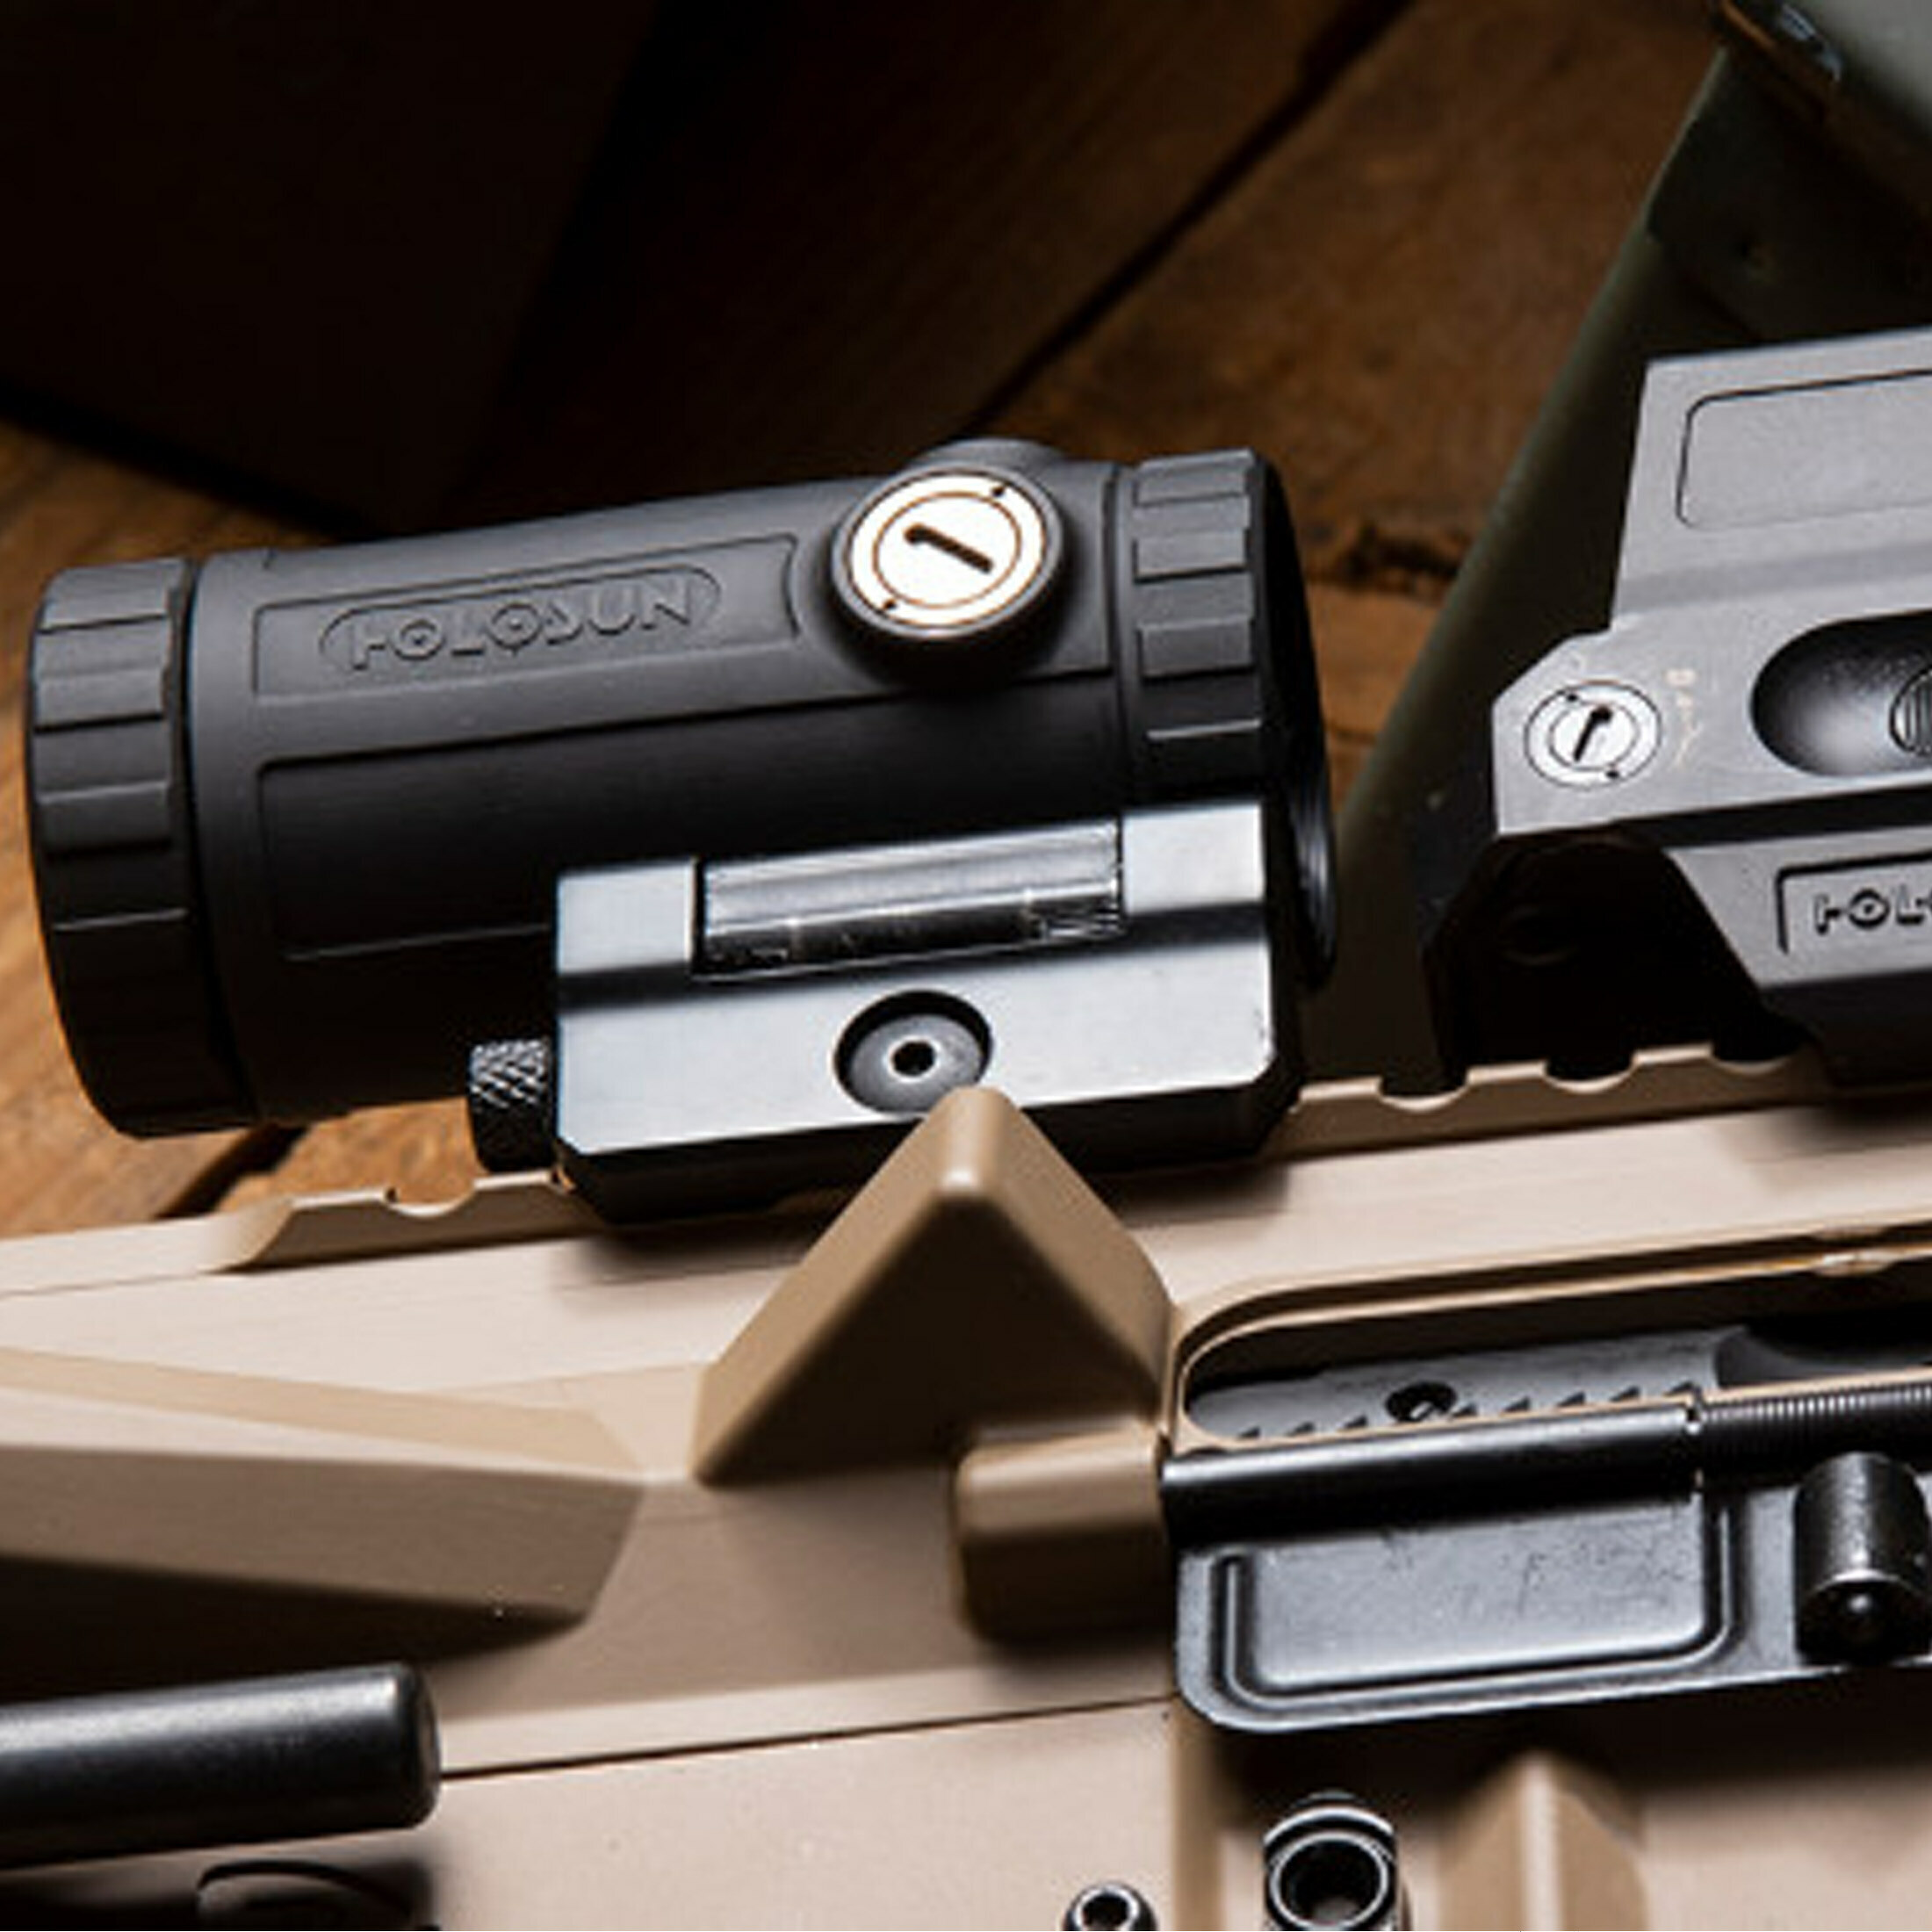 Holosun Magnifier HM3X-TITAN, 3 ganger forstørrelse, svart, Picatinny, jakt, sportsskyting, softair…